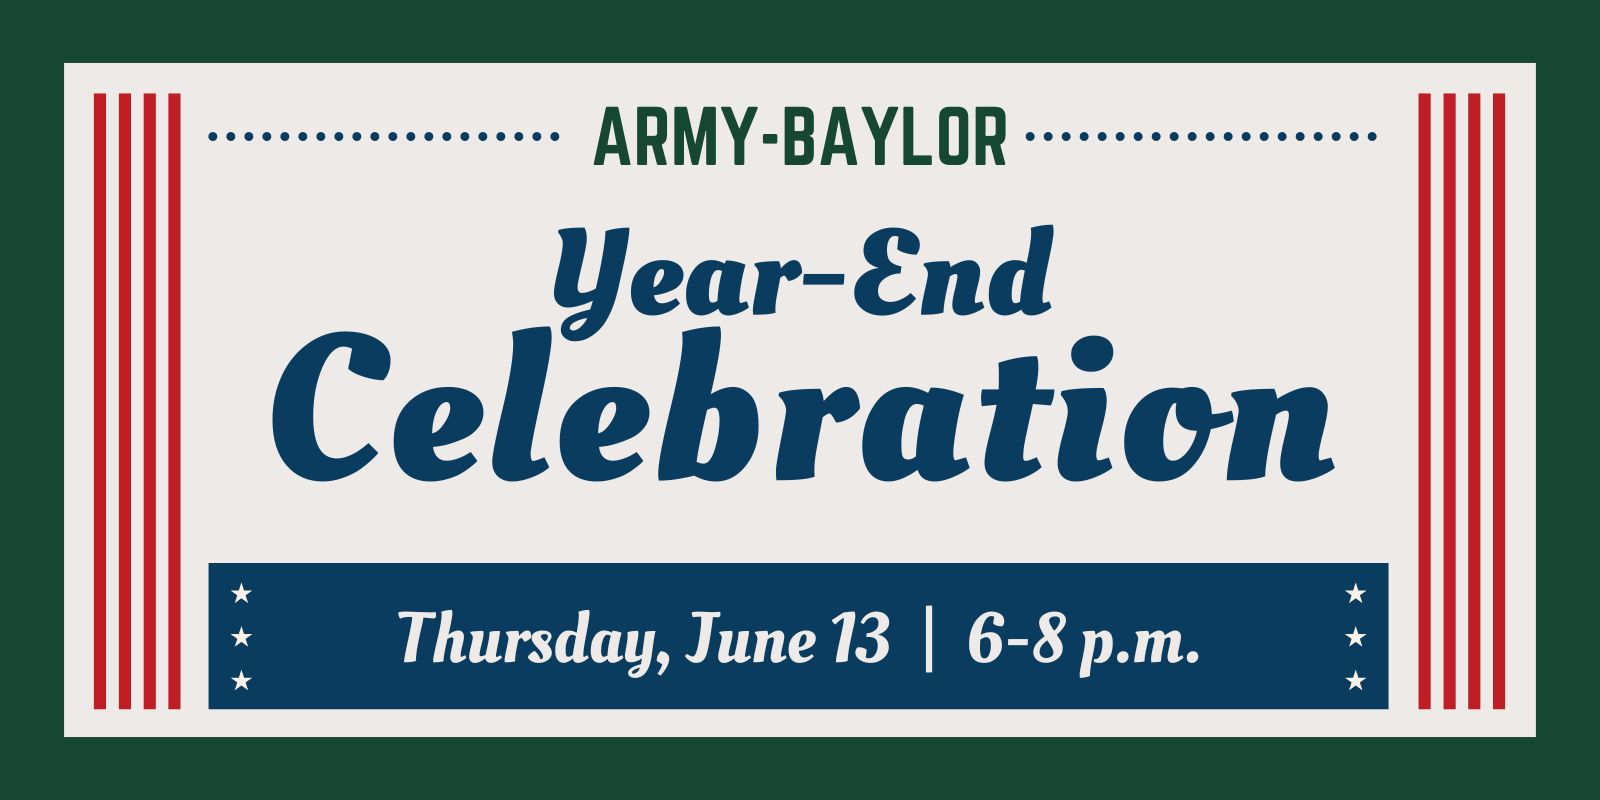 Army-Baylor Year-End Celebration | Thursday, June 13, 6-8 p.m.